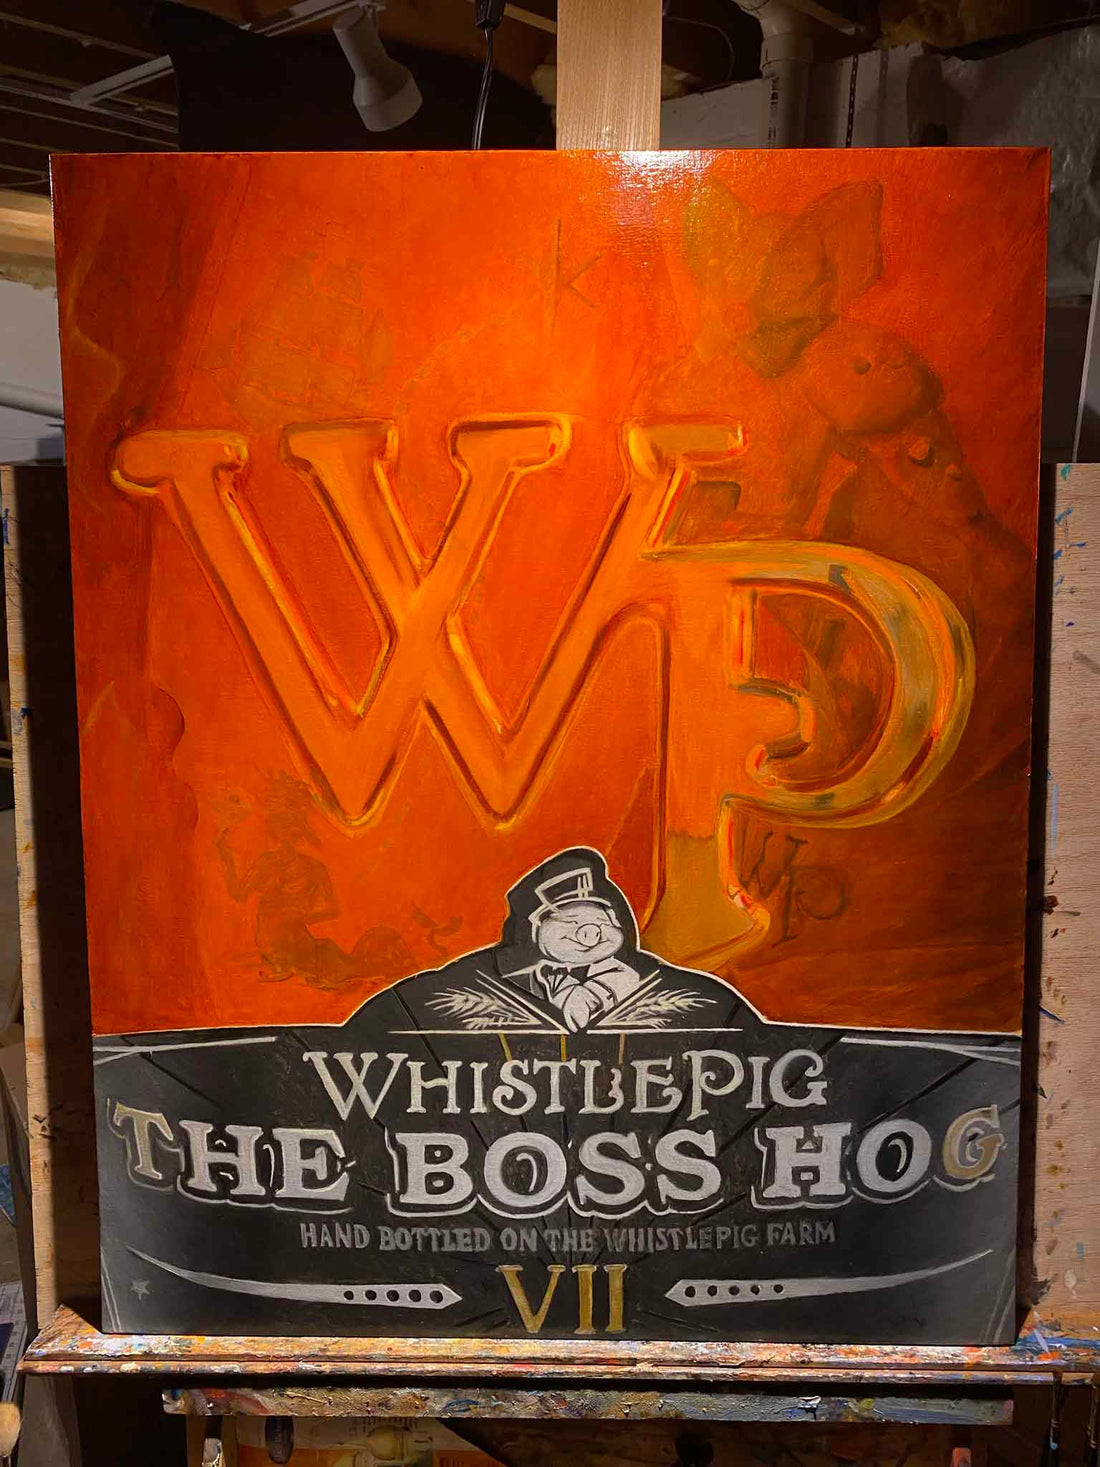 Whistle Pig Rye Whiskey process photos - Max Savaiko Art Gallery